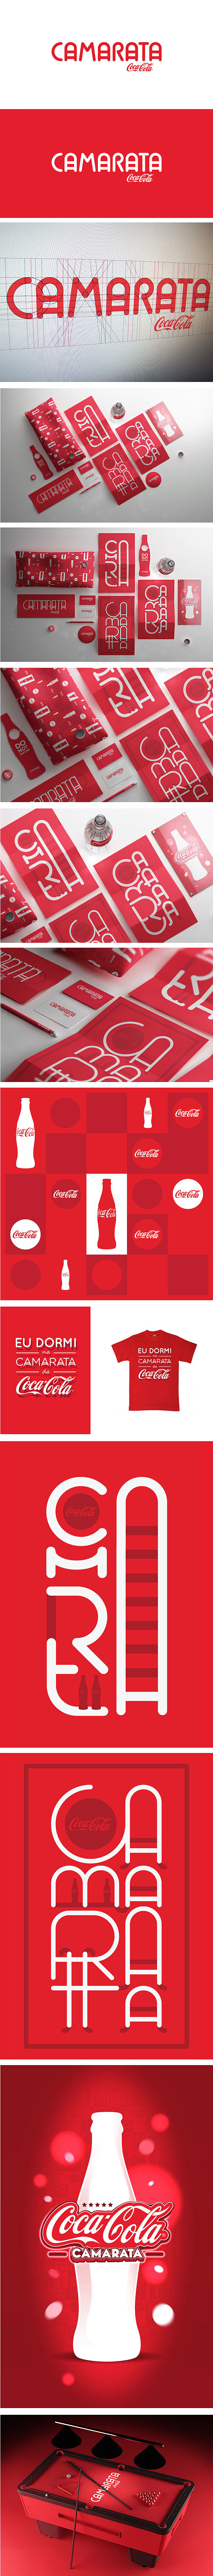 Camarata Coca-Cola